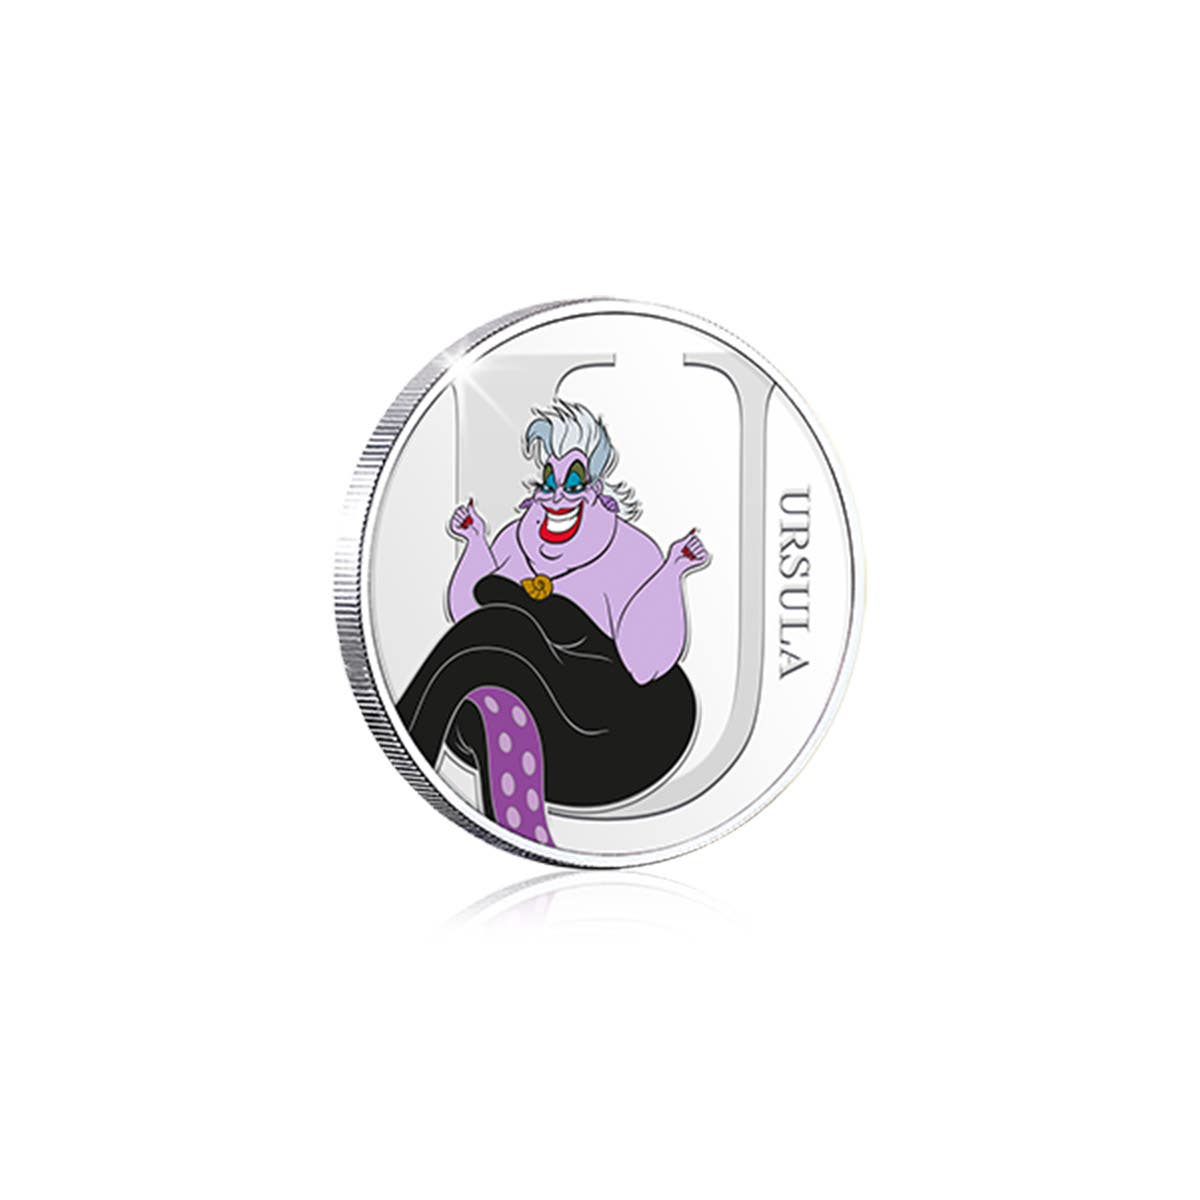 Disney U is for Ursula Silver-Plated Commemorative